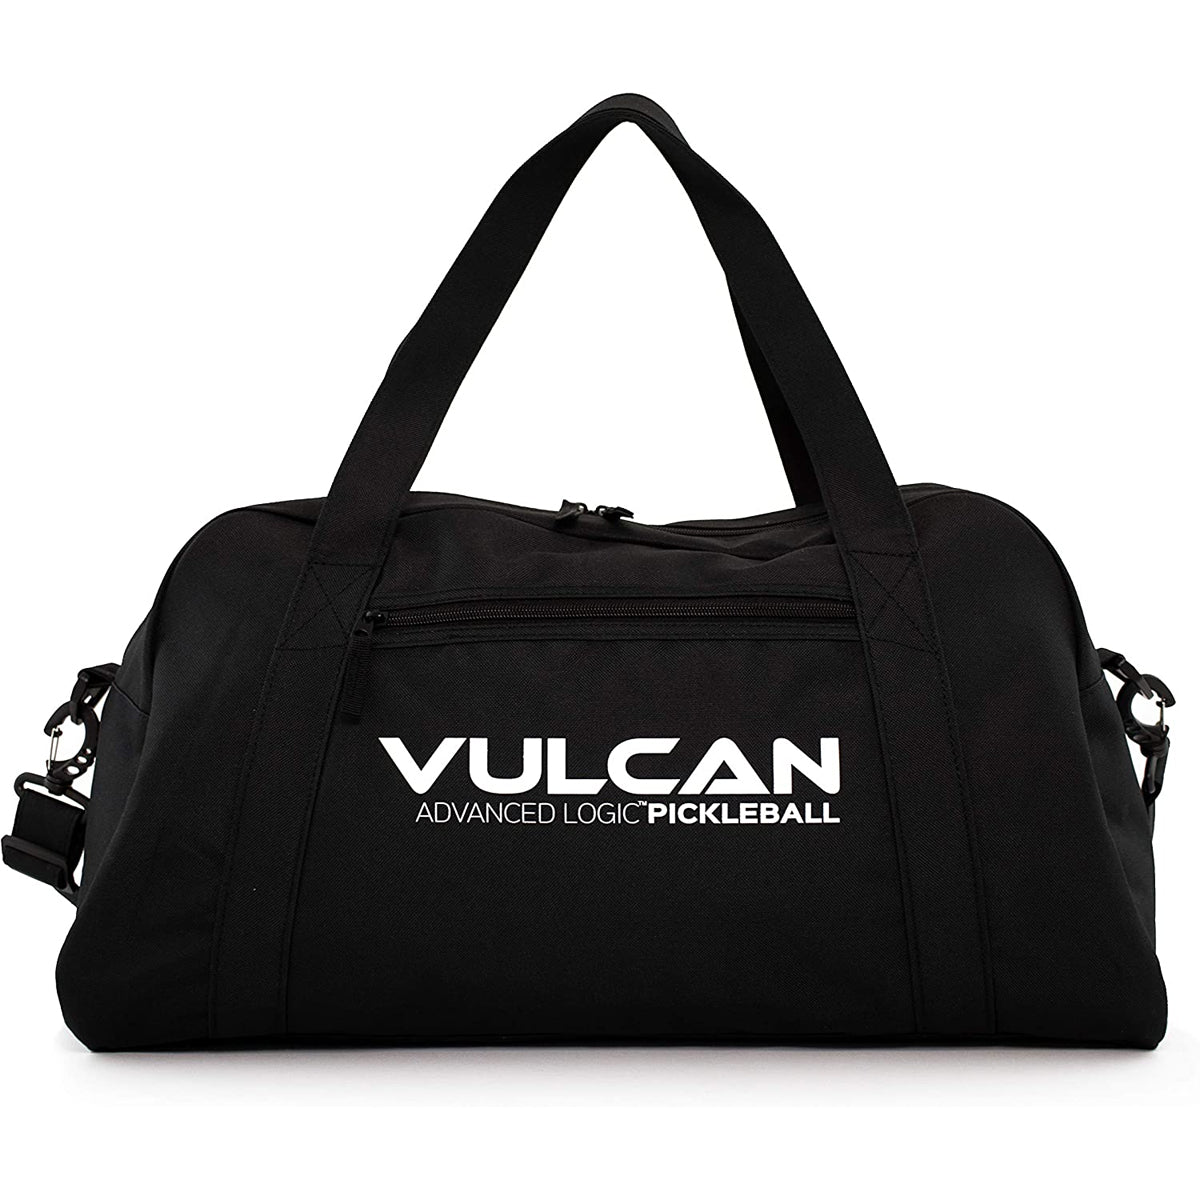 Vulcan Pickleball Duffel Bag - Black Vulcan